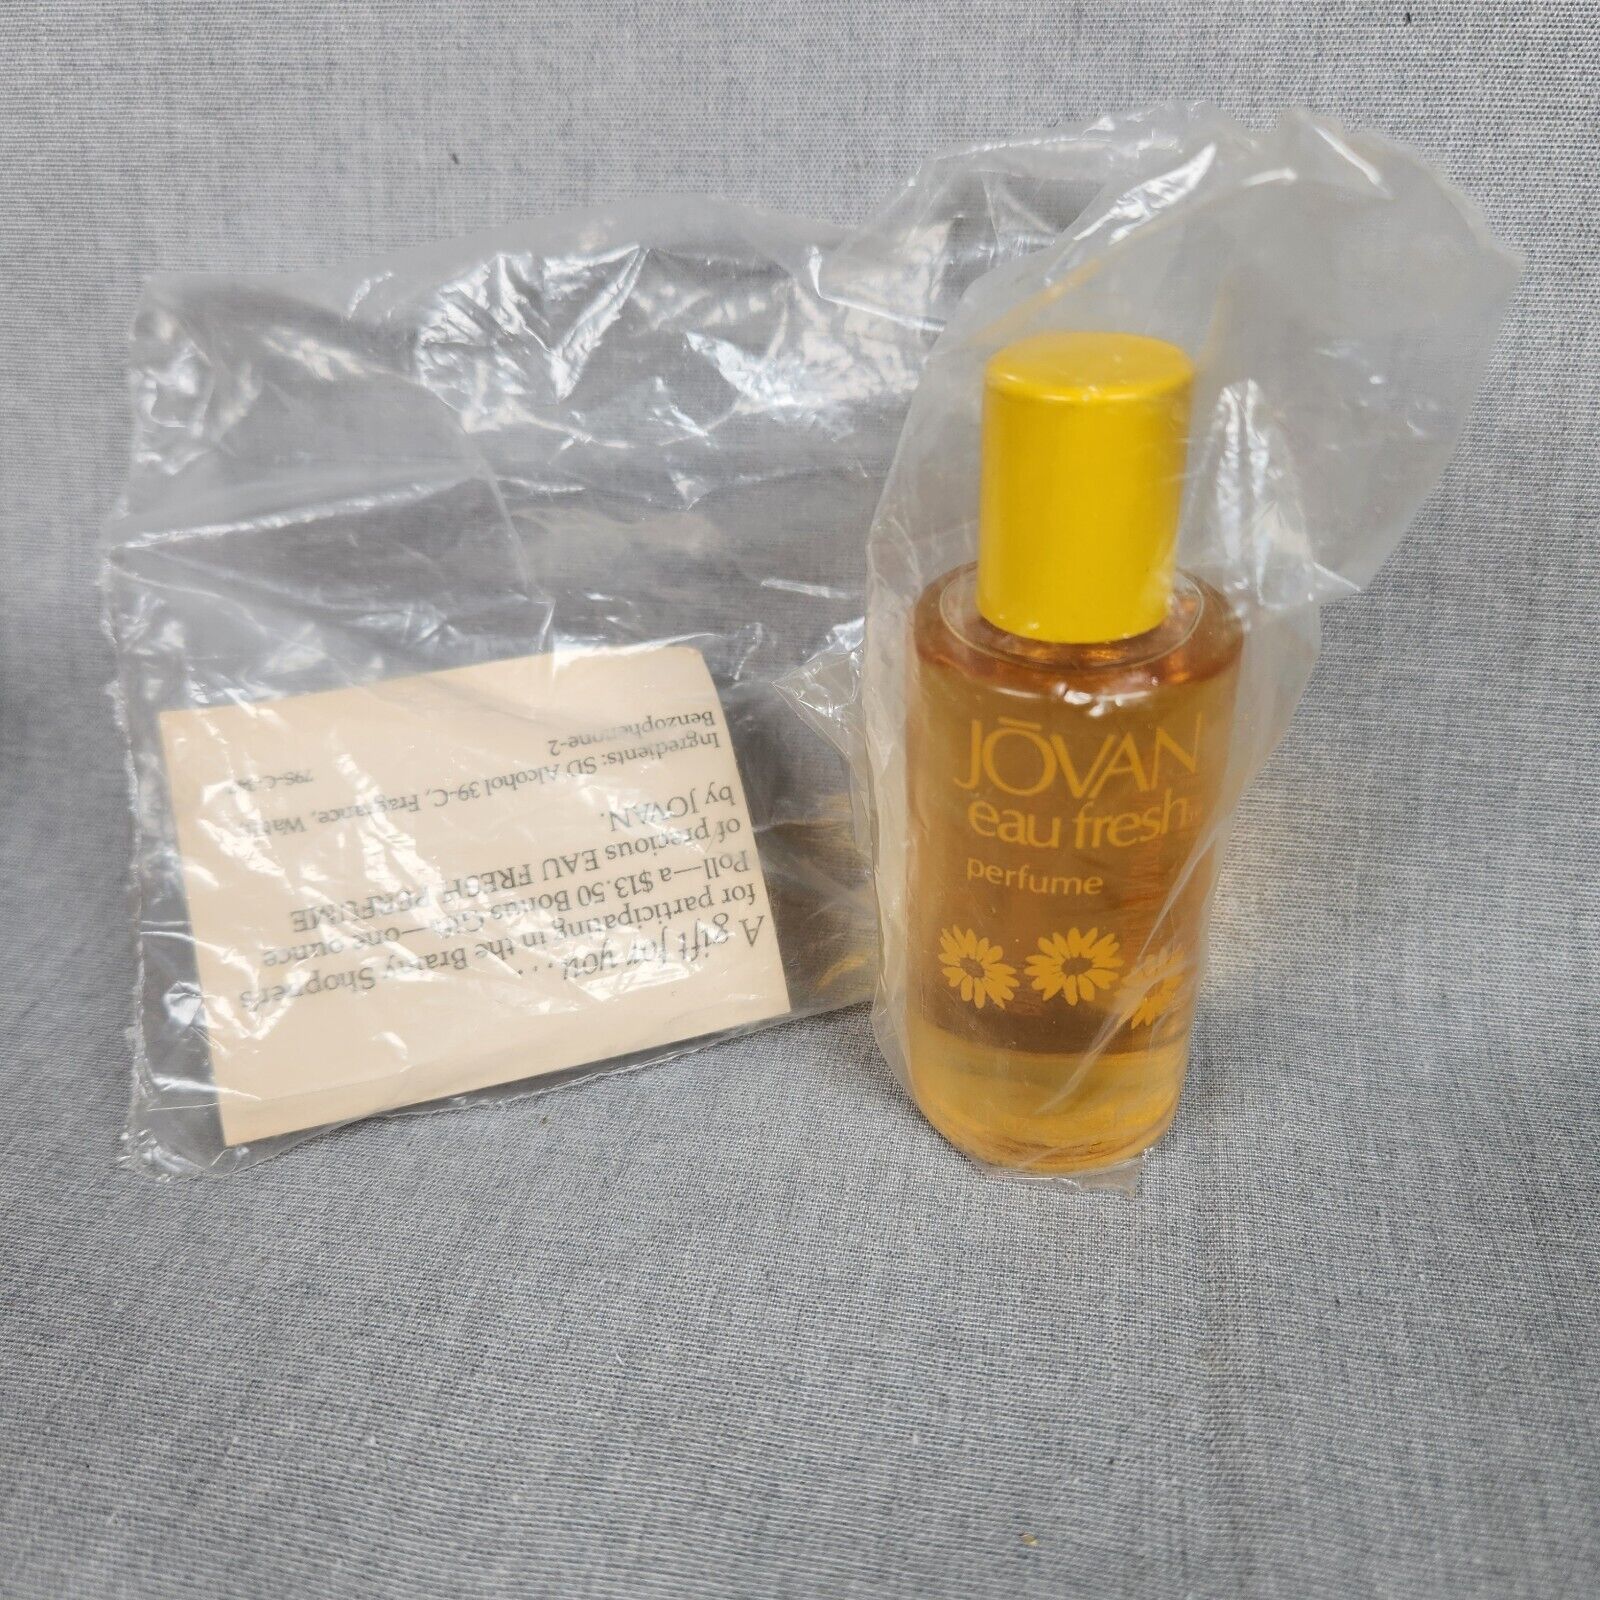 Vintage Jovan Eau Fresh Perfume © 1979 1 fl. oz. New without Box Collectible